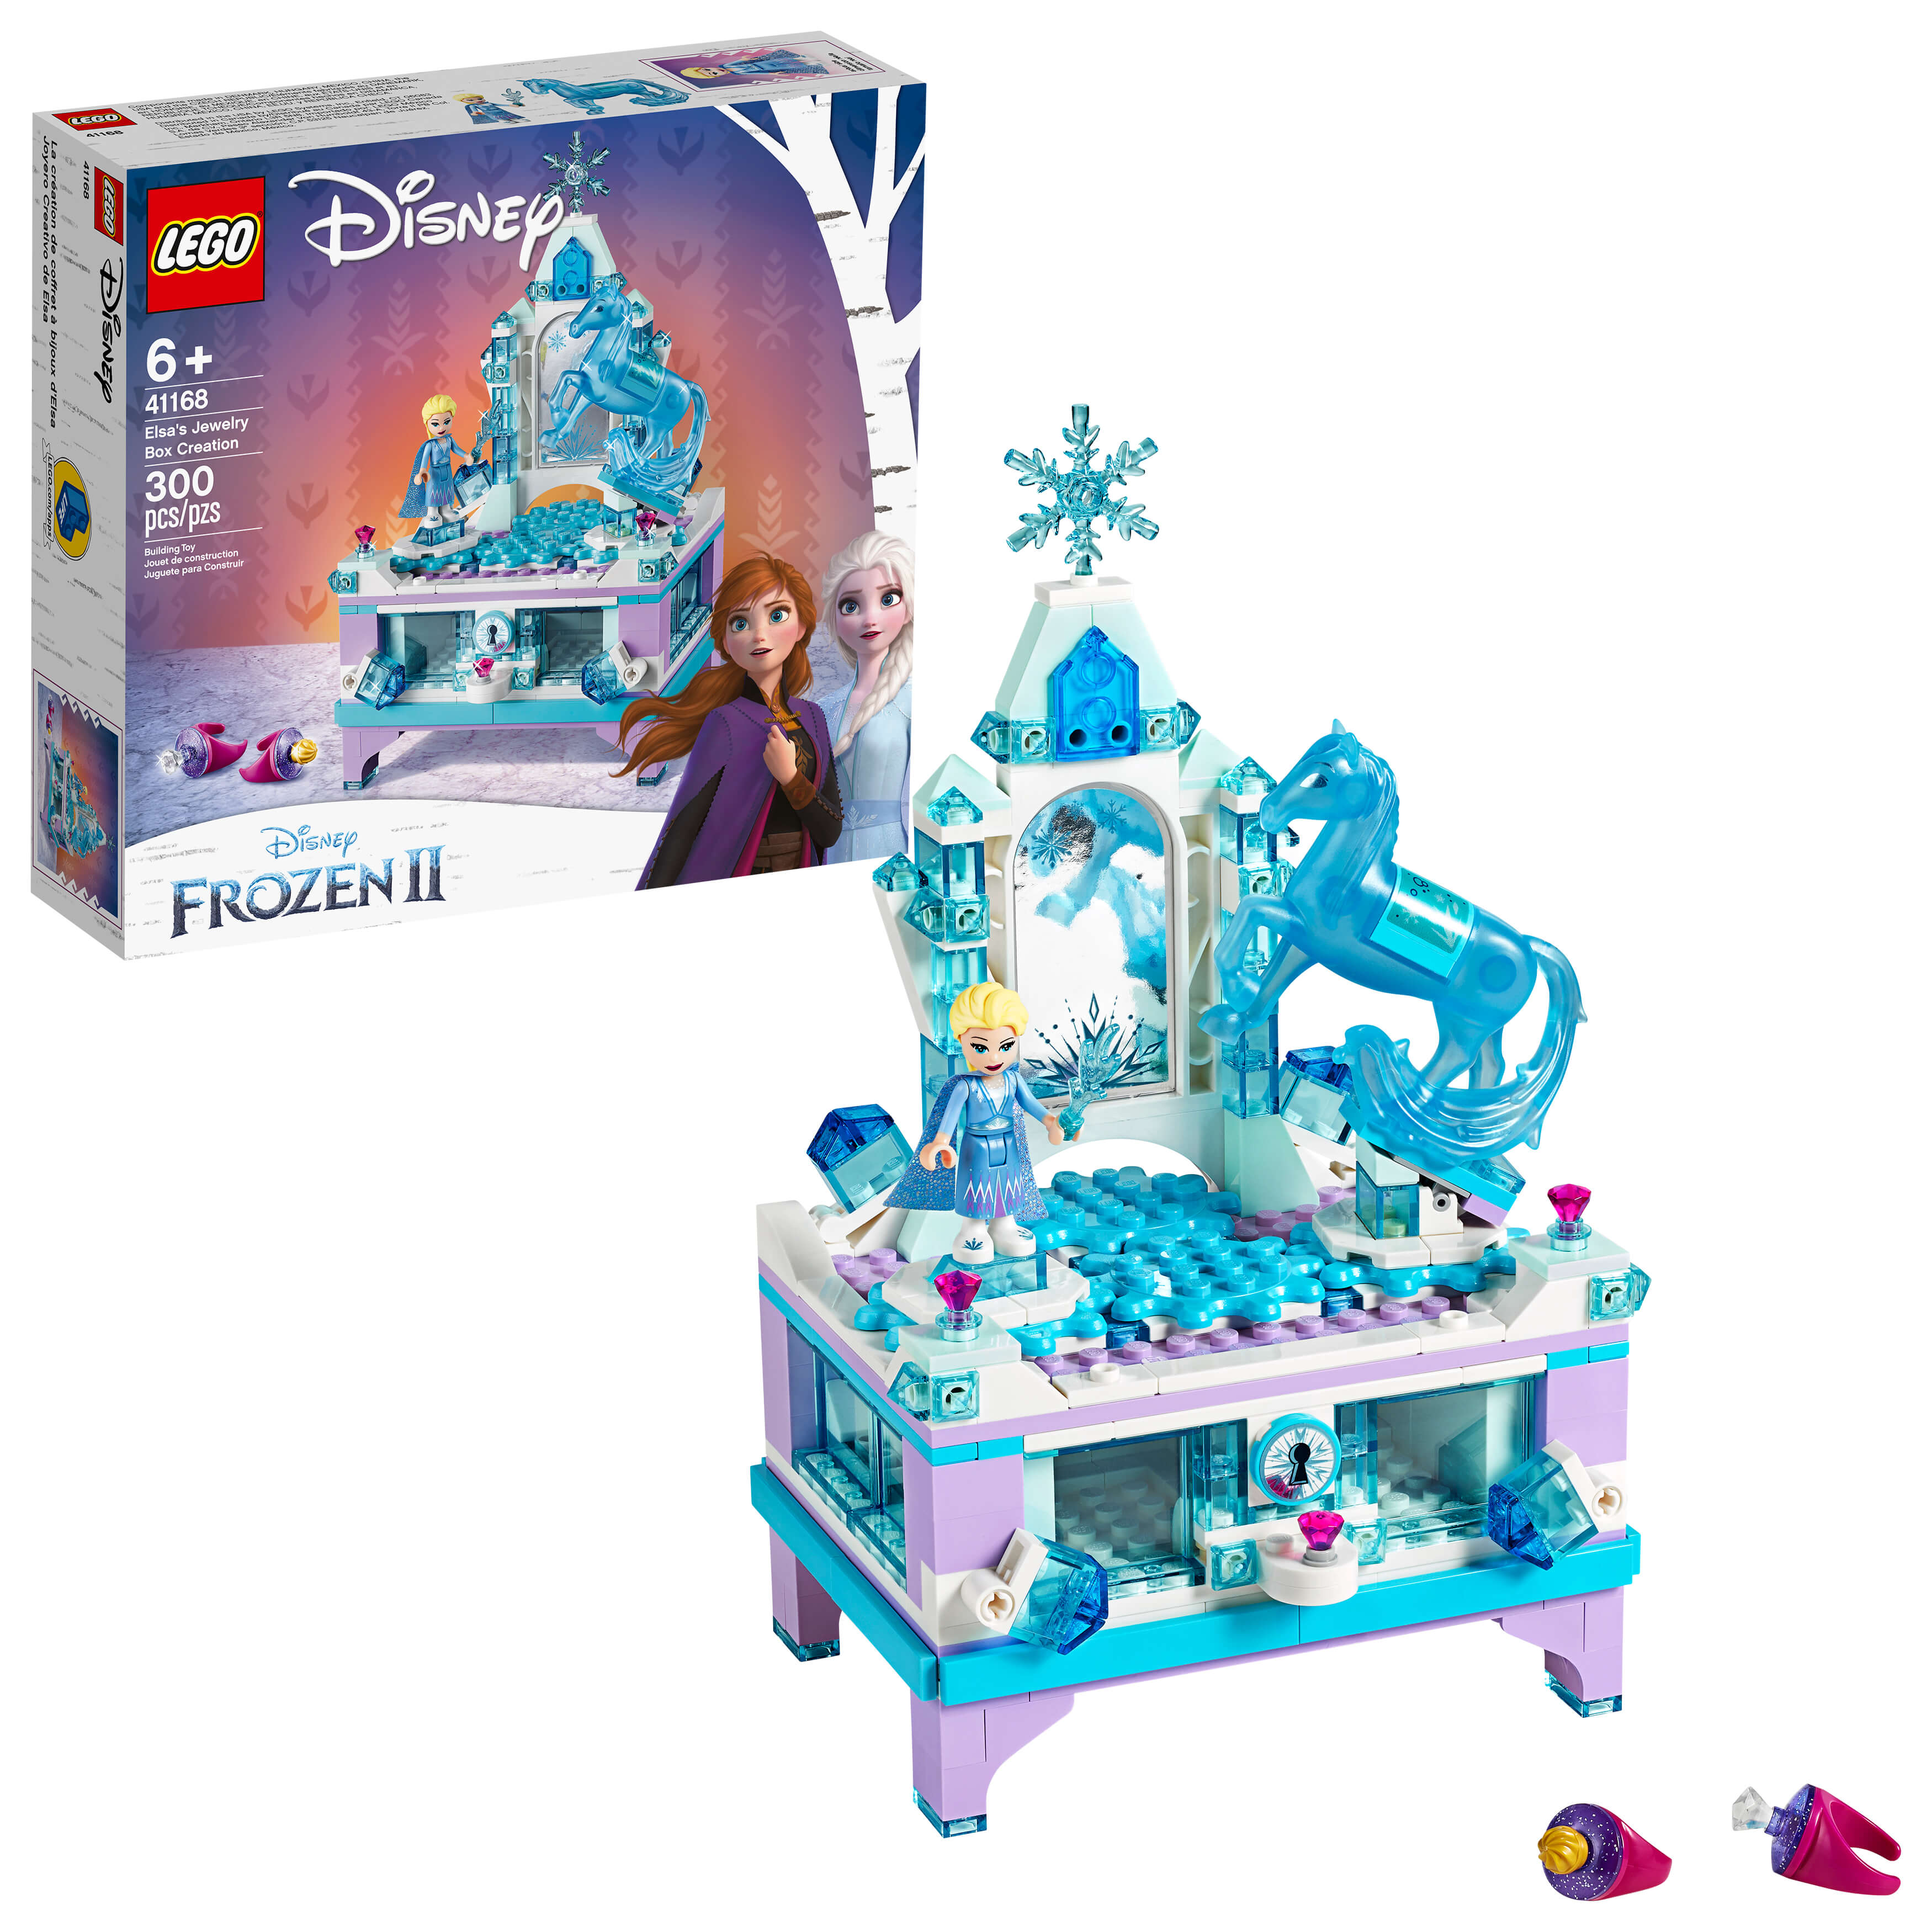 LEGO® l Disney Frozen II Elsas Jewelry Box Creation 41168 Building Kit (300 Piece)